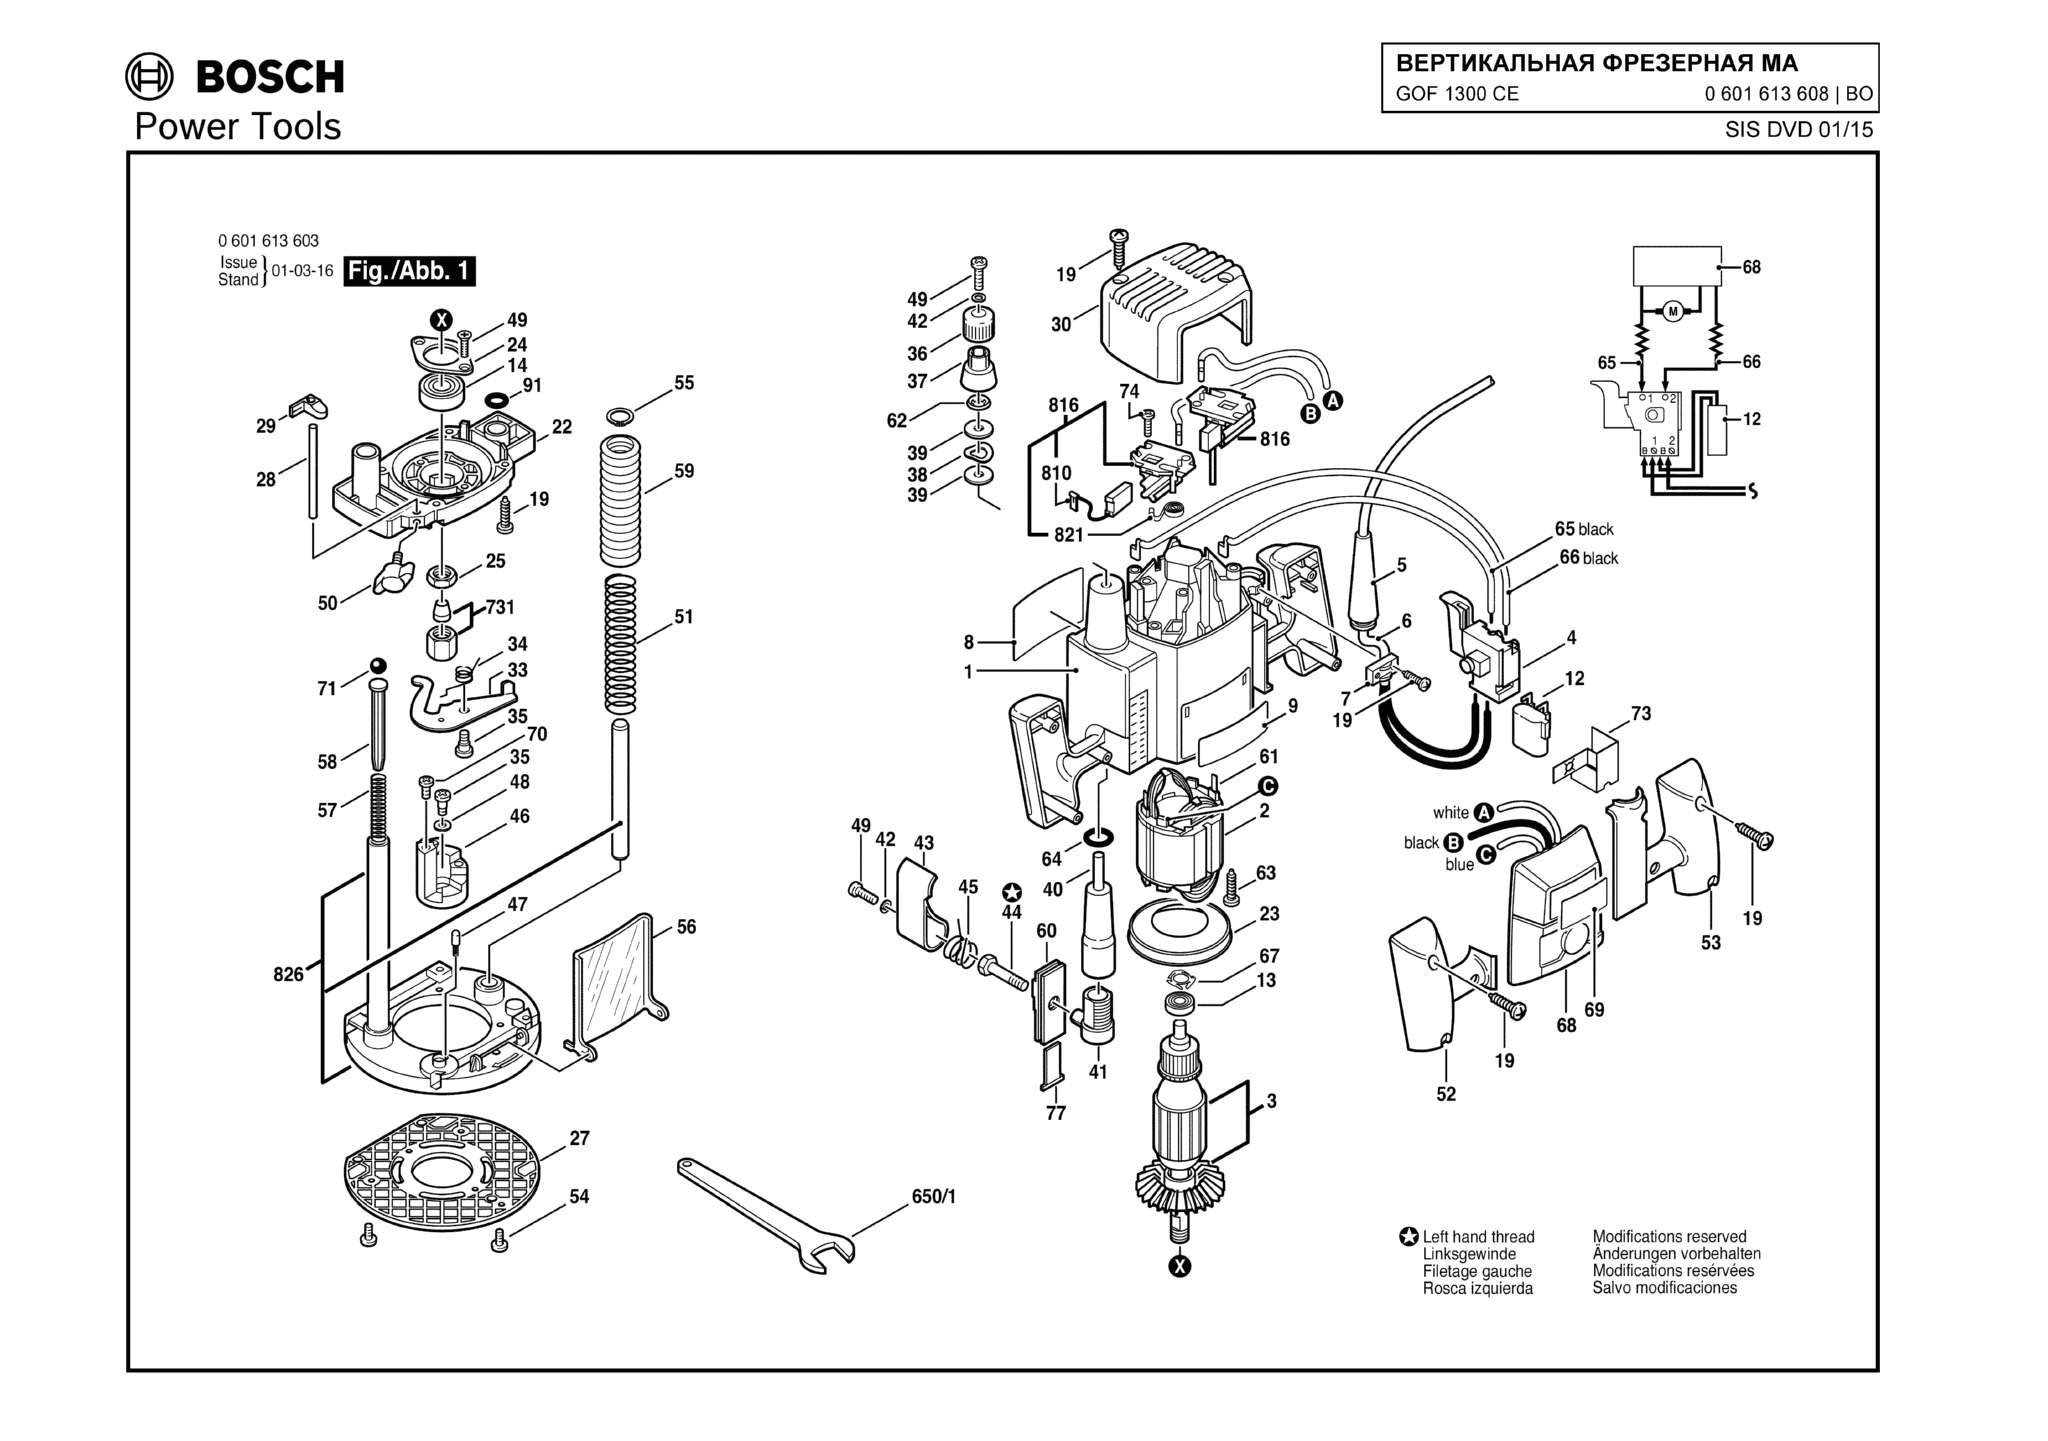 Запчасти, схема и деталировка Bosch GOF 1300 CE (ТИП 0601613608)